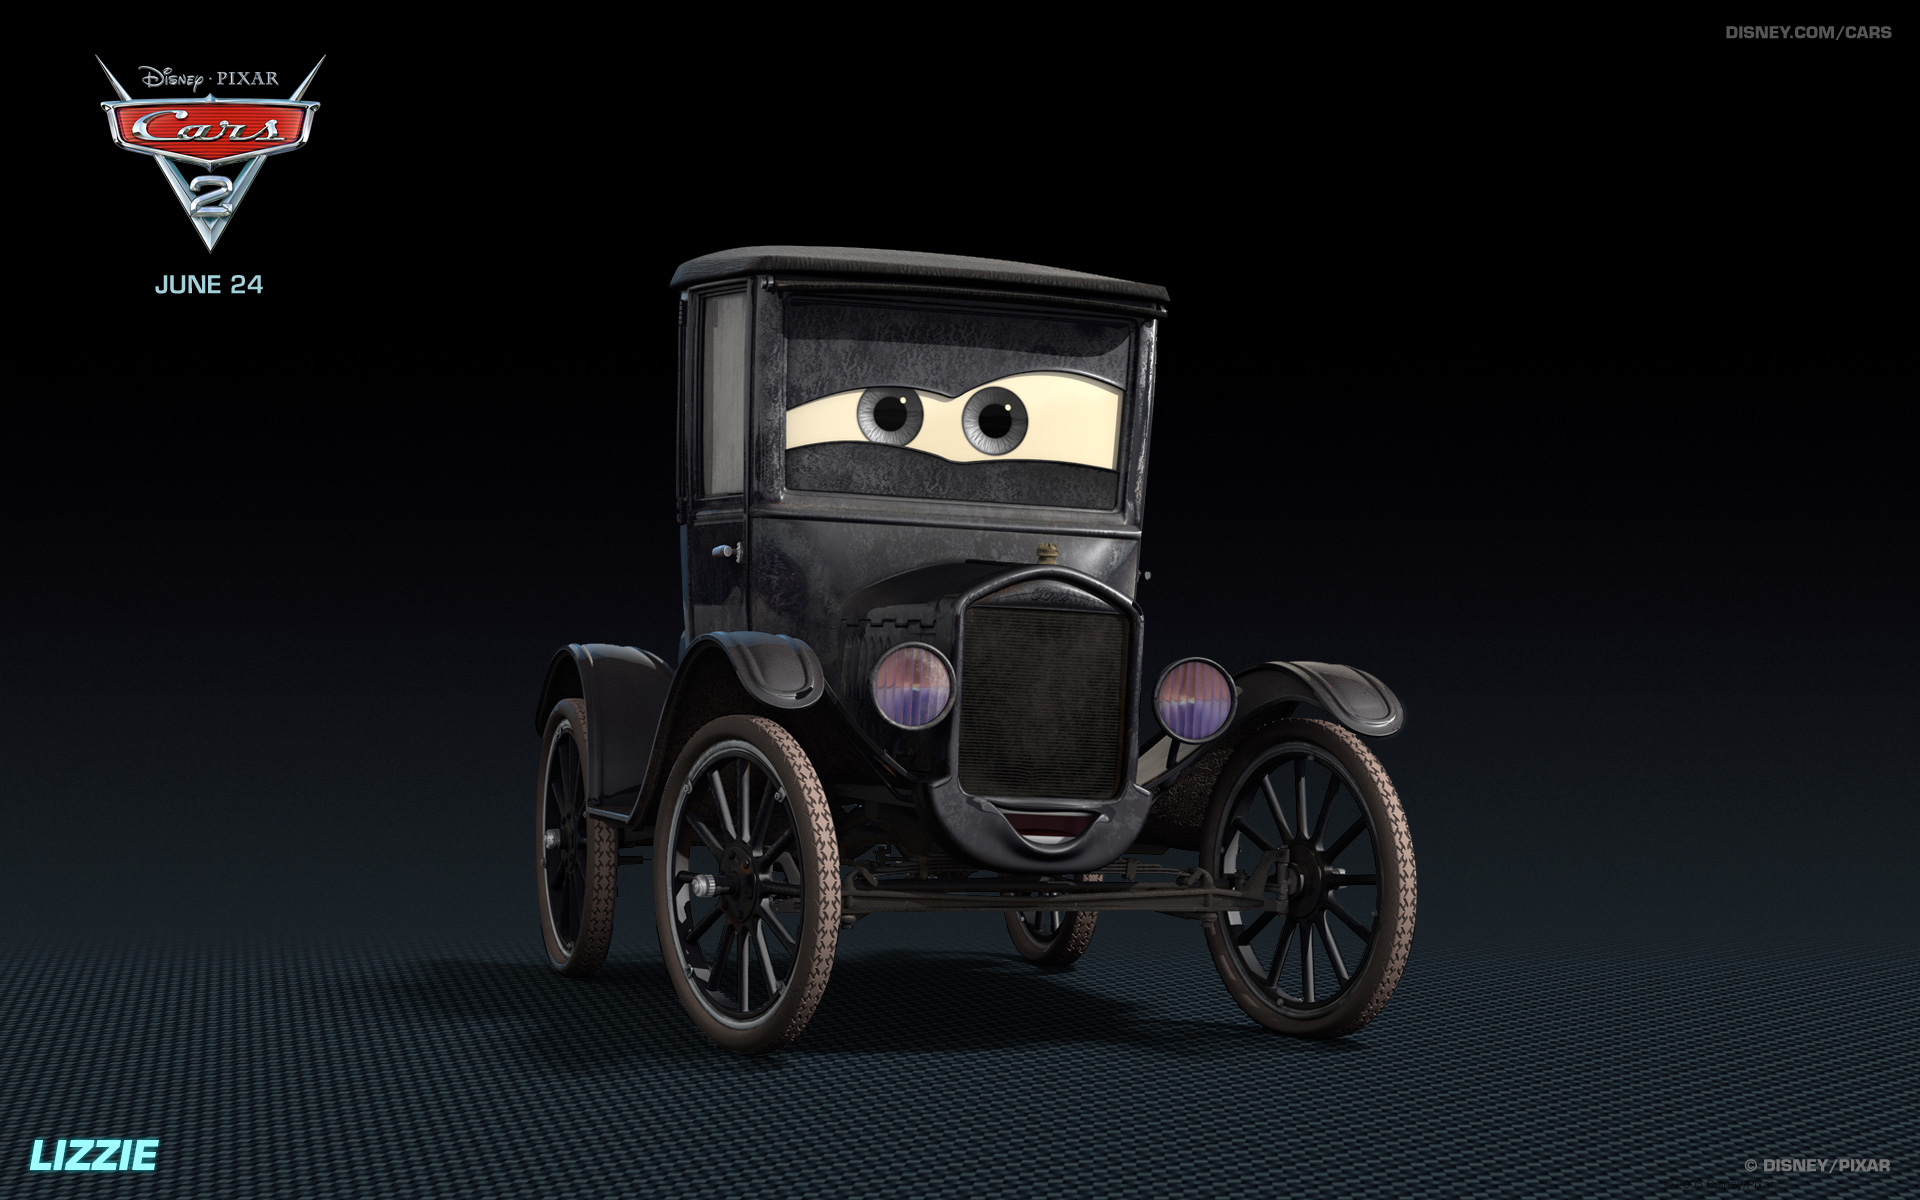 Lizzie the Old Car from Disney's Cars HD Desktop Wallpaper